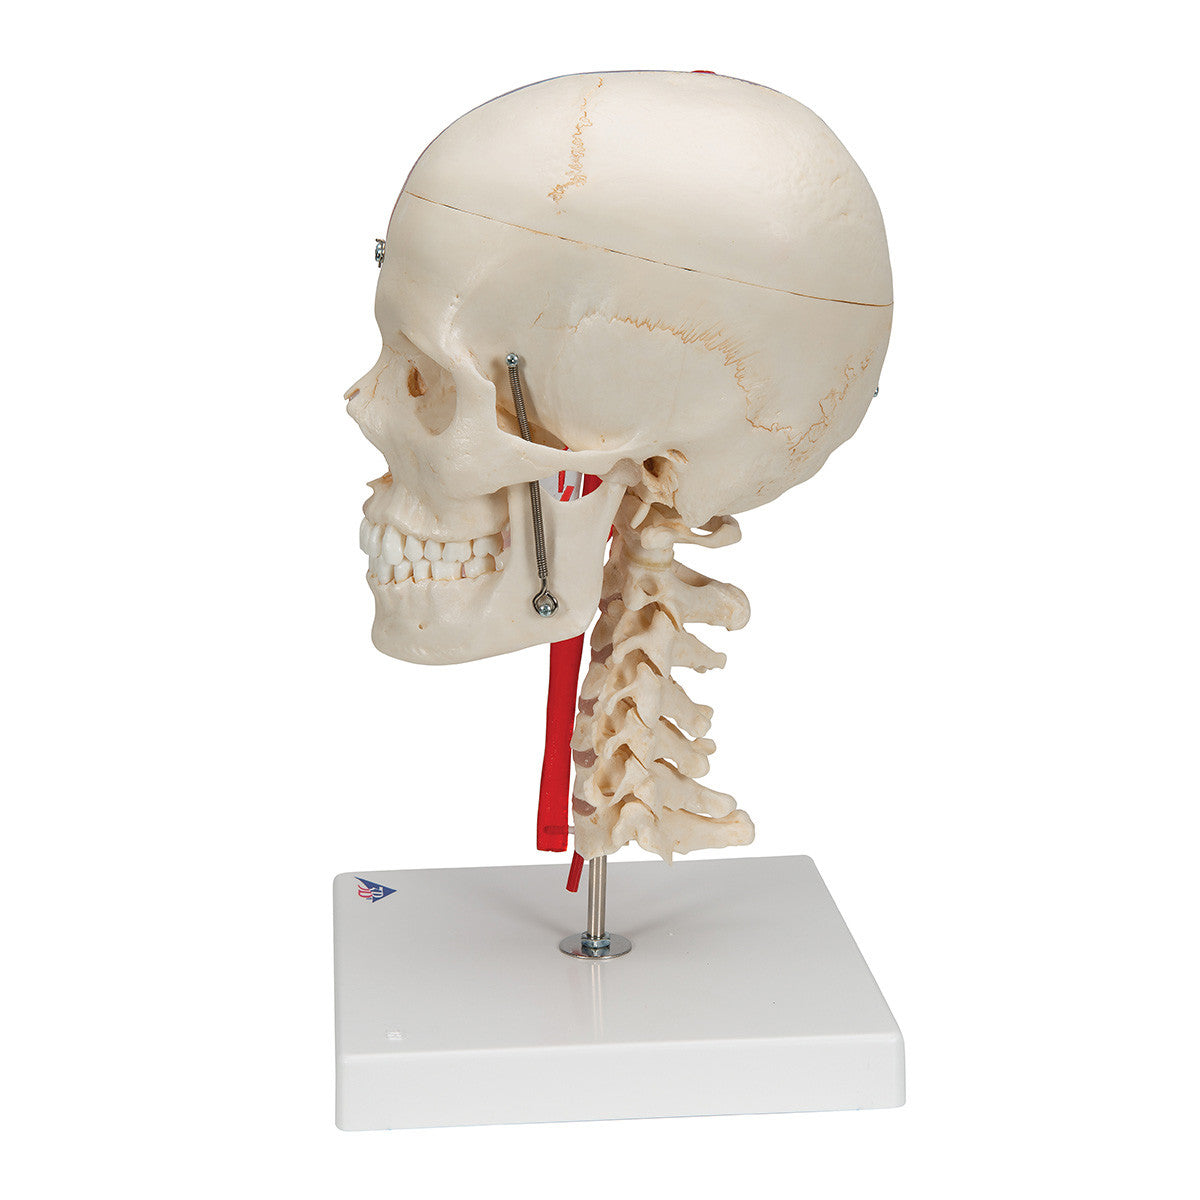 BONElike Human Skull Model, Half Transparent & Half Bony- Complete with Brain and Vertebrae | 3B Scientific A283